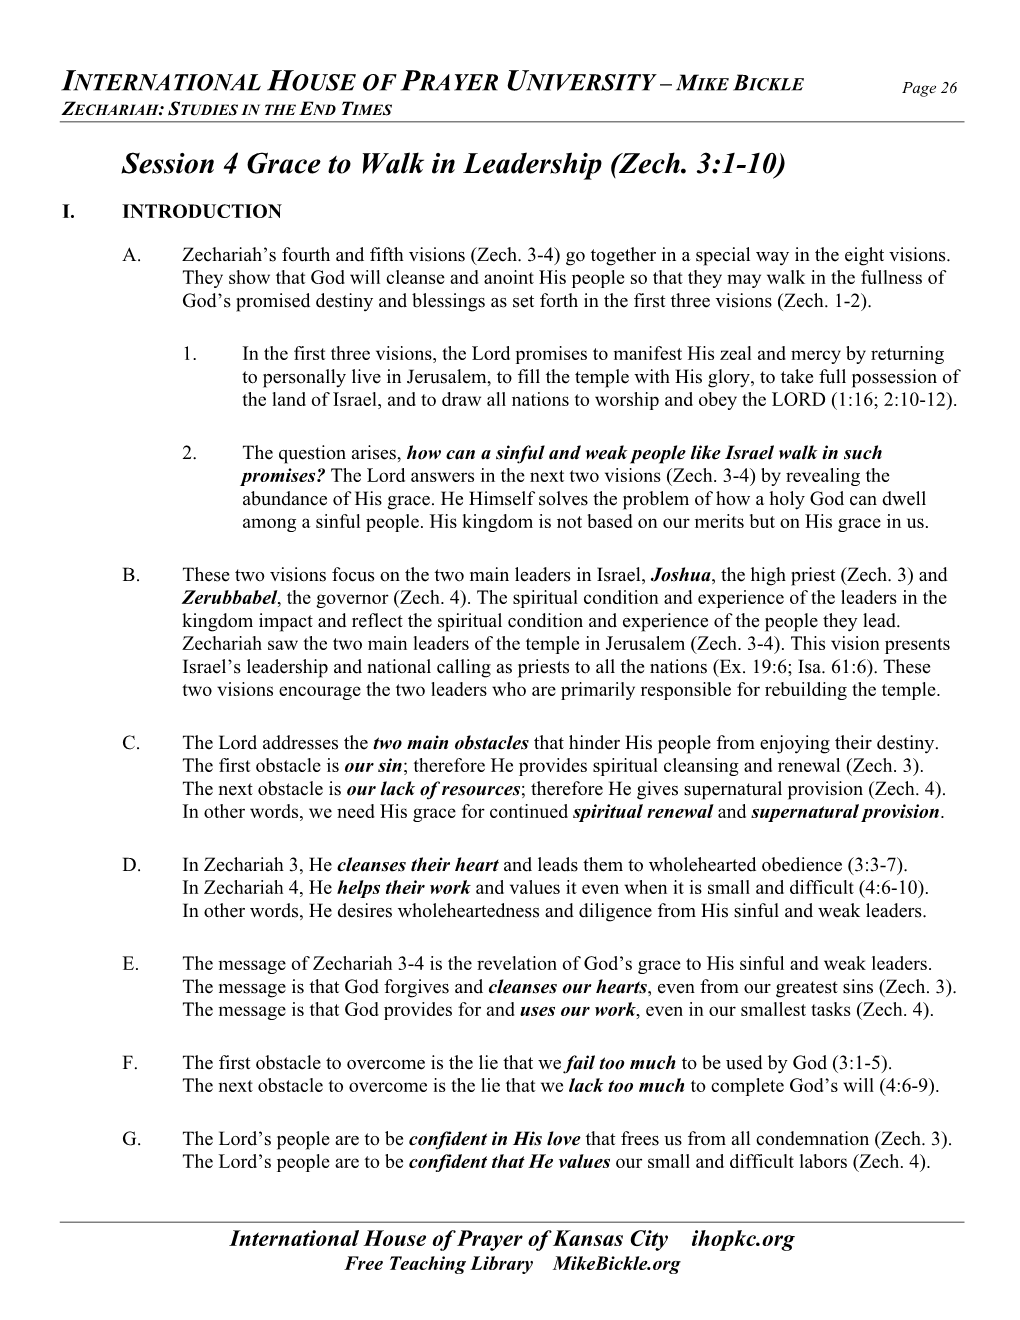 Session 4 Grace to Walk in Leadership (Zech. 3:1-10)